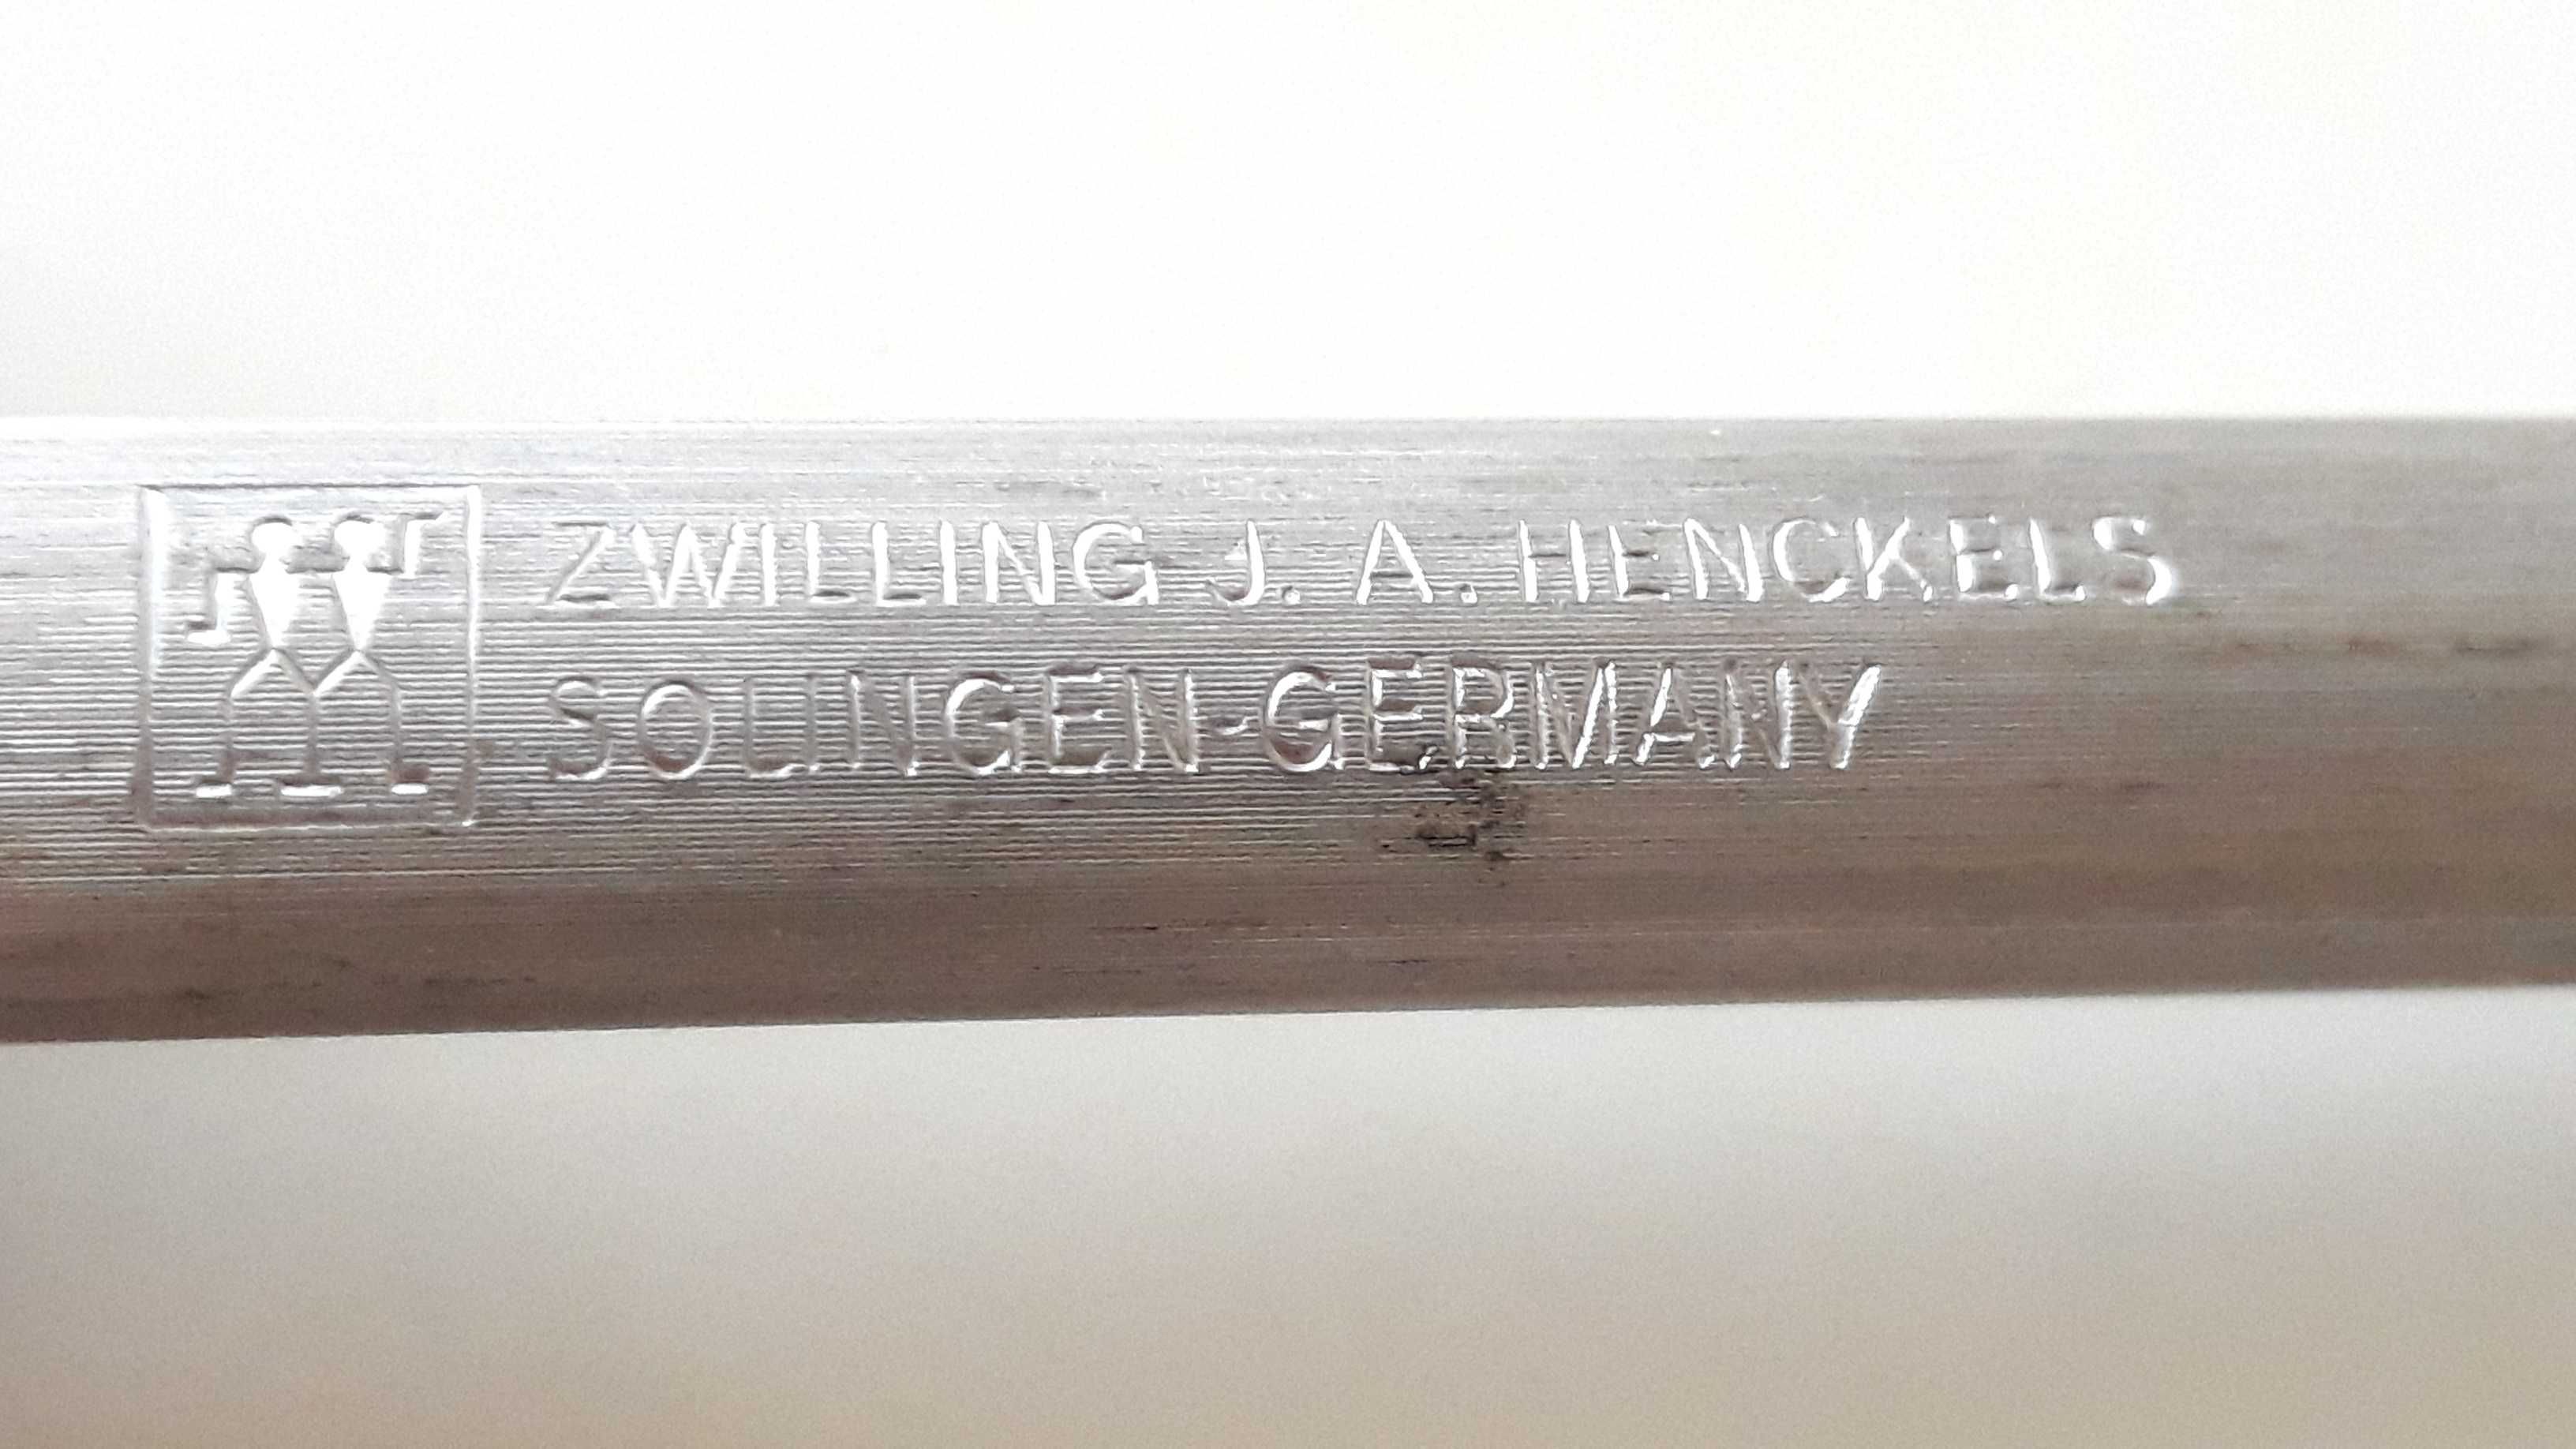 Masat Zwilling ja henckels Solingen Germany Pila ascutit cutite 41 cm